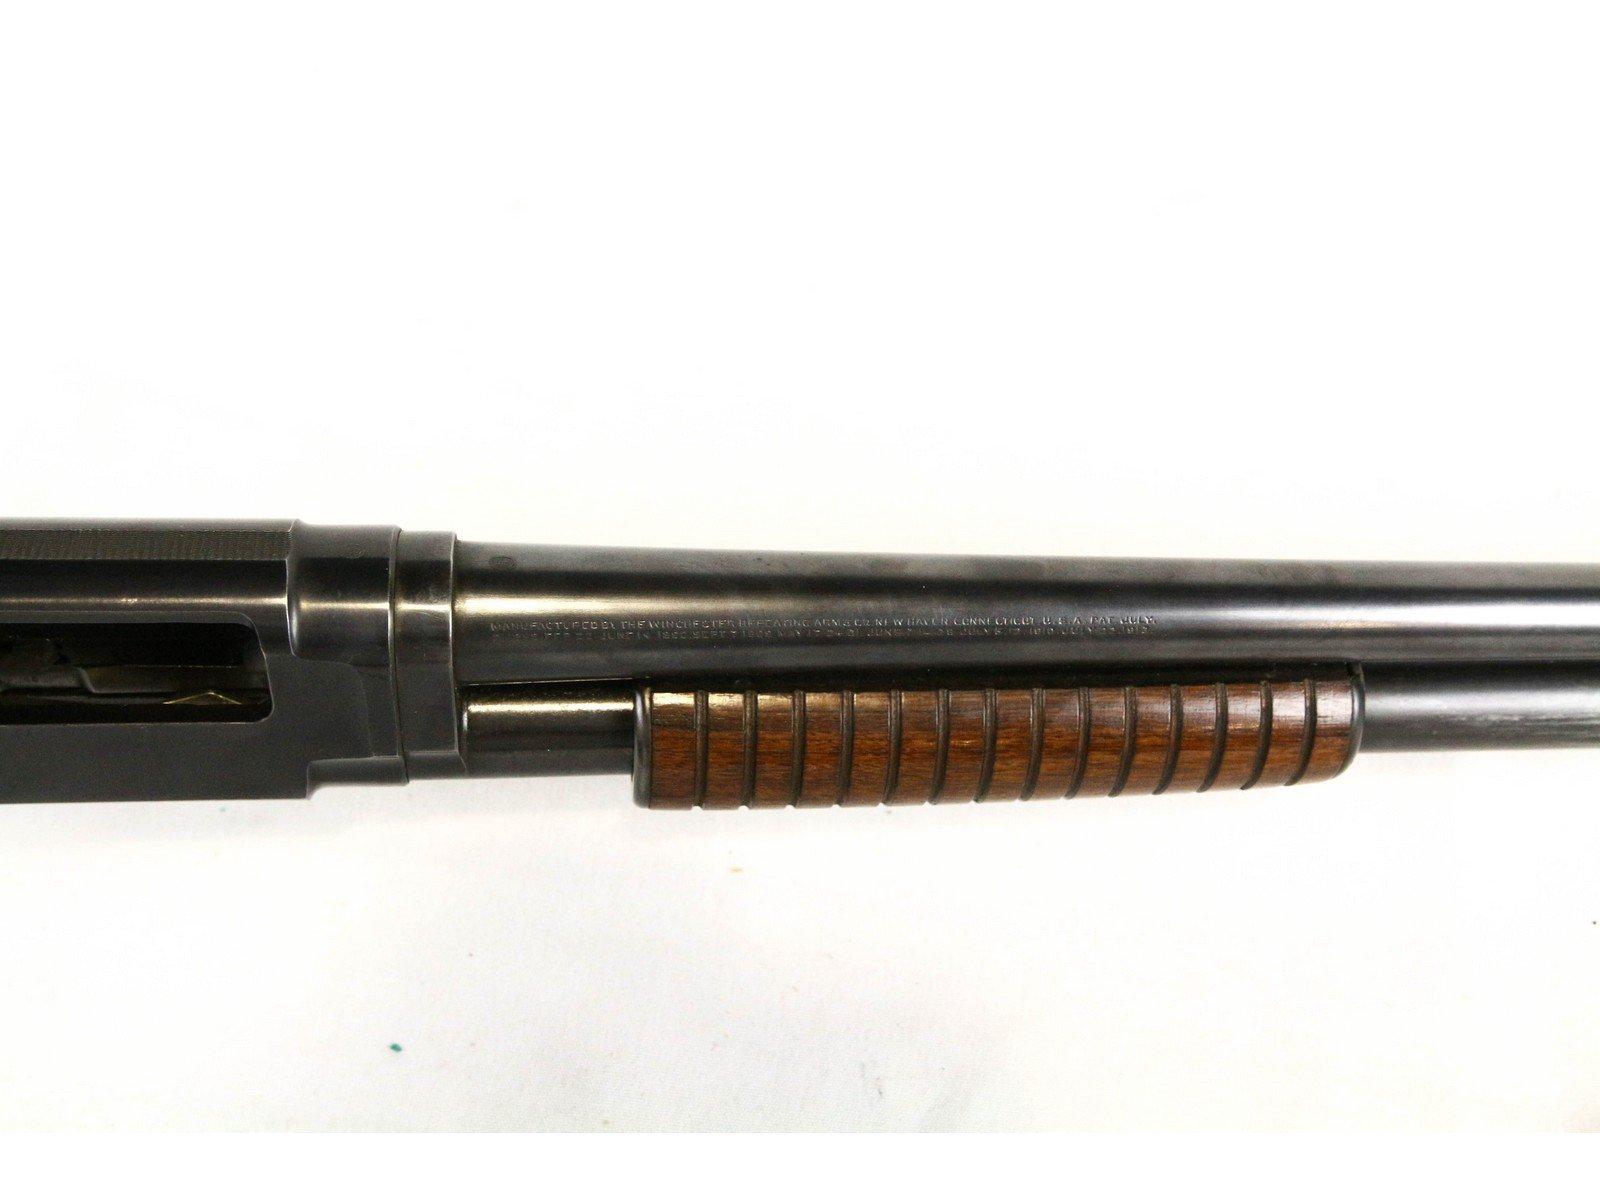 Winchester Model 12 16 GA Shotgun